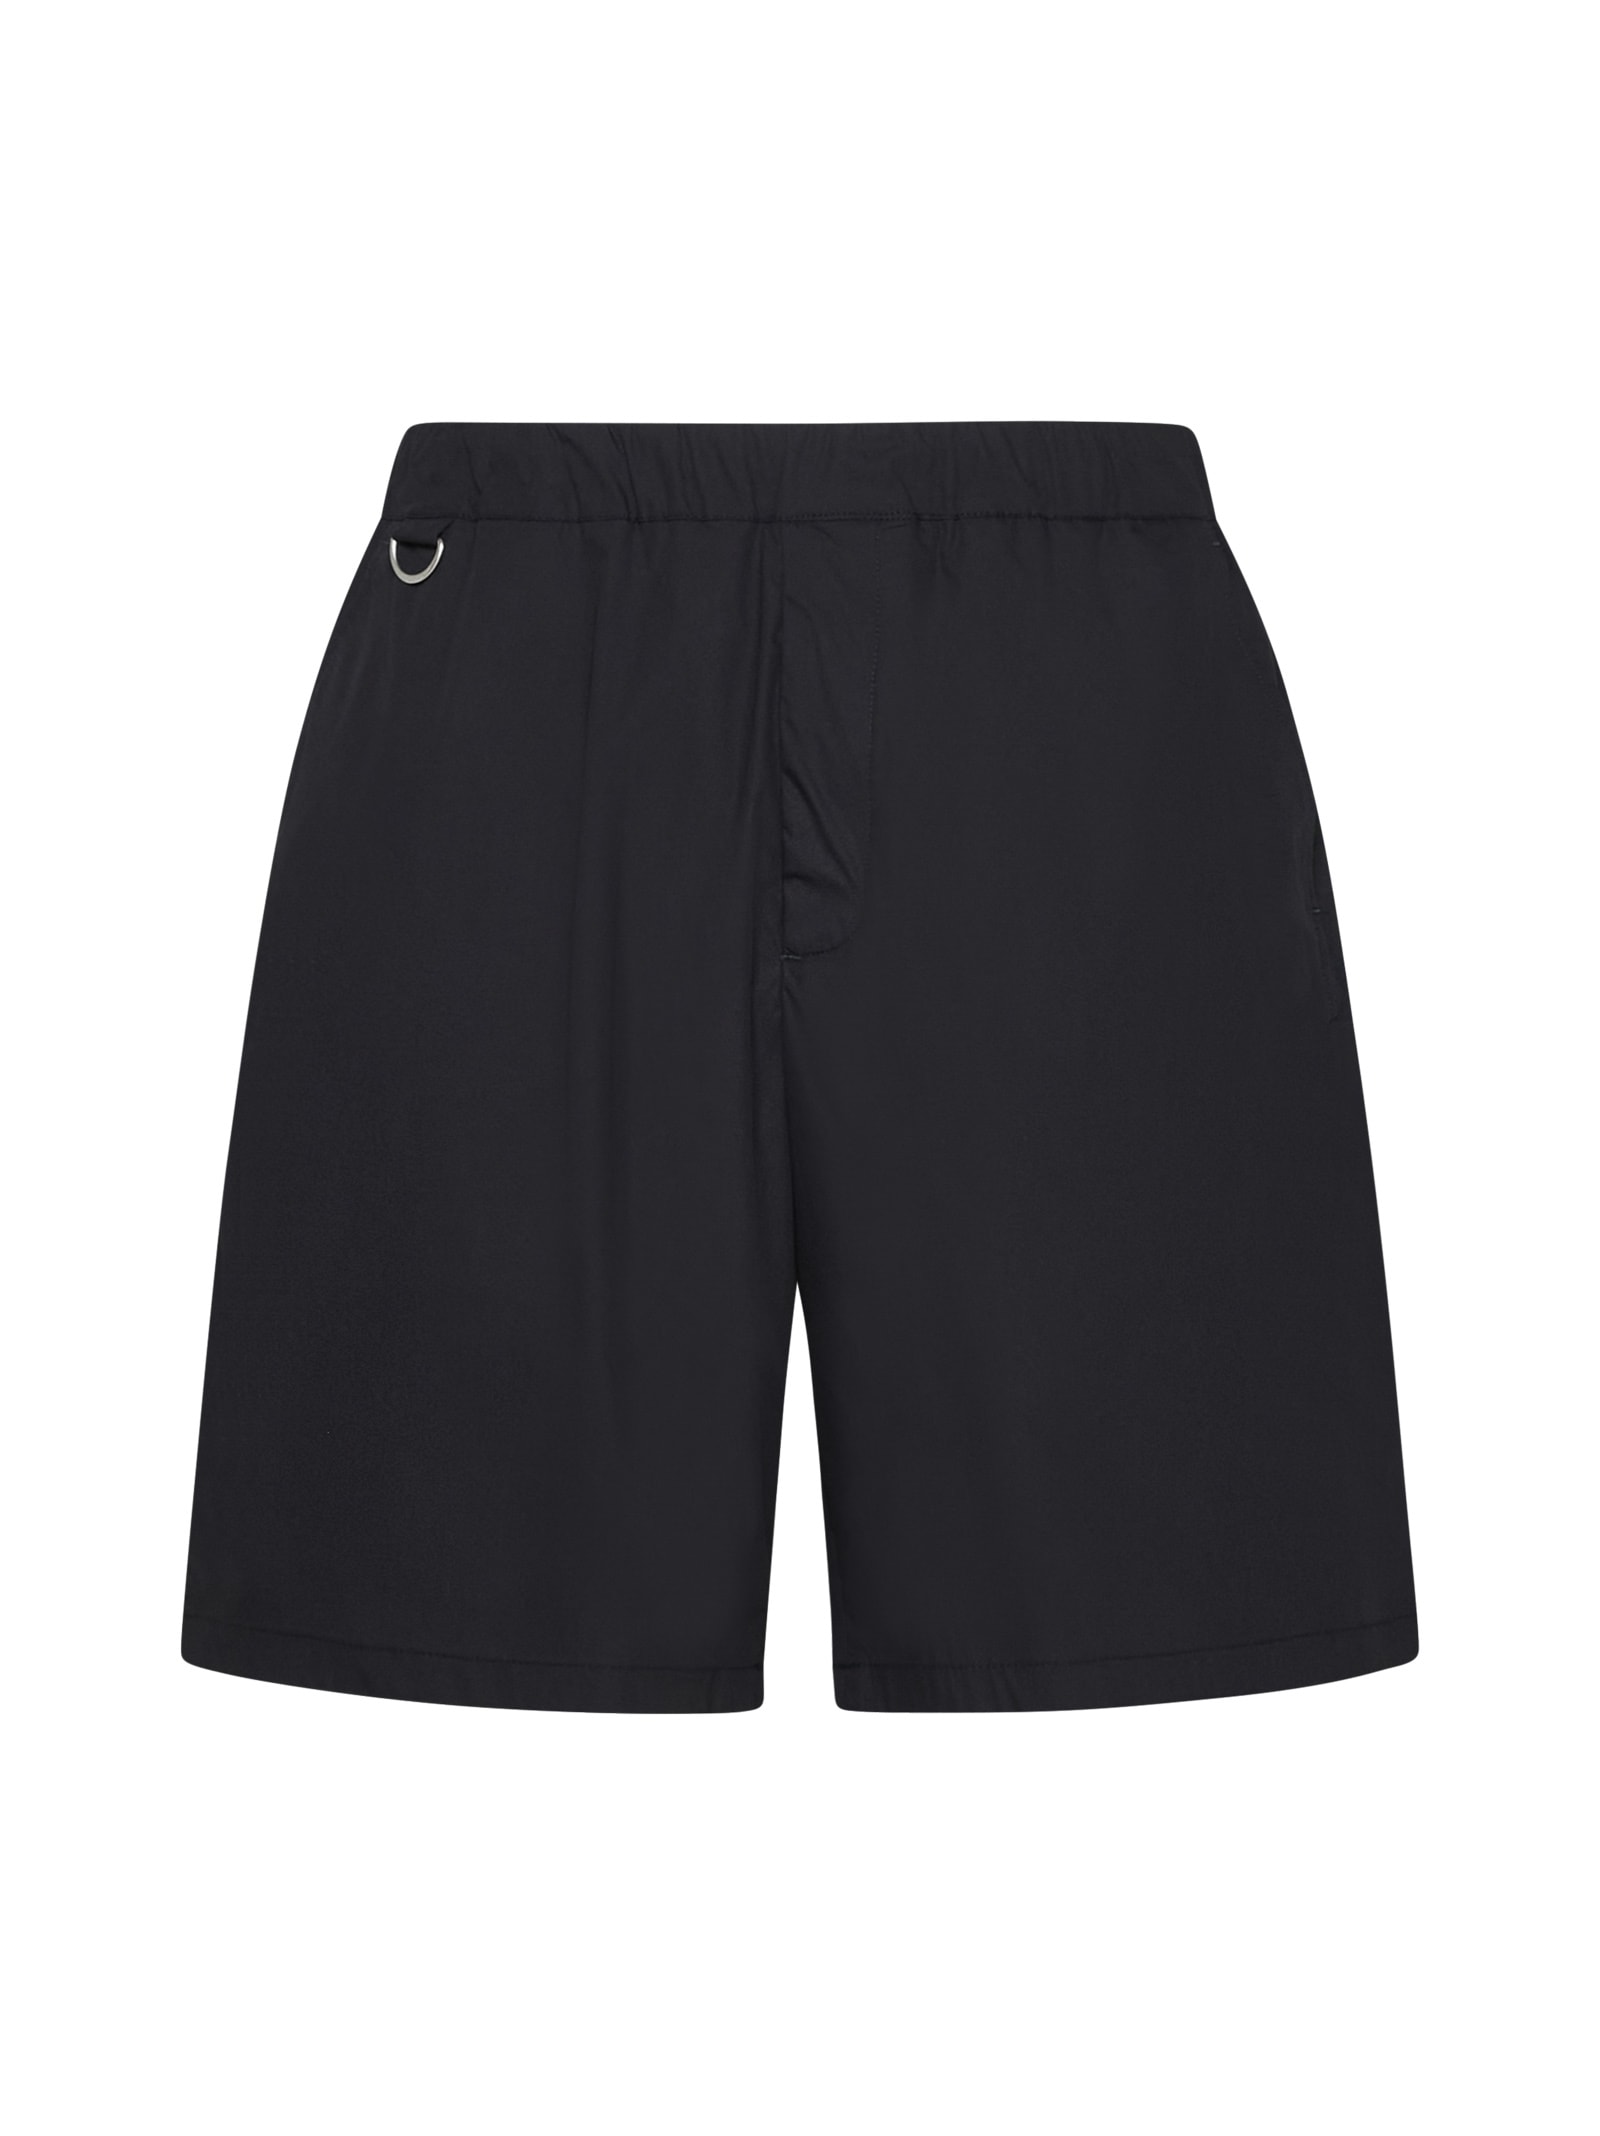 Low Brand Shorts In Jet Black